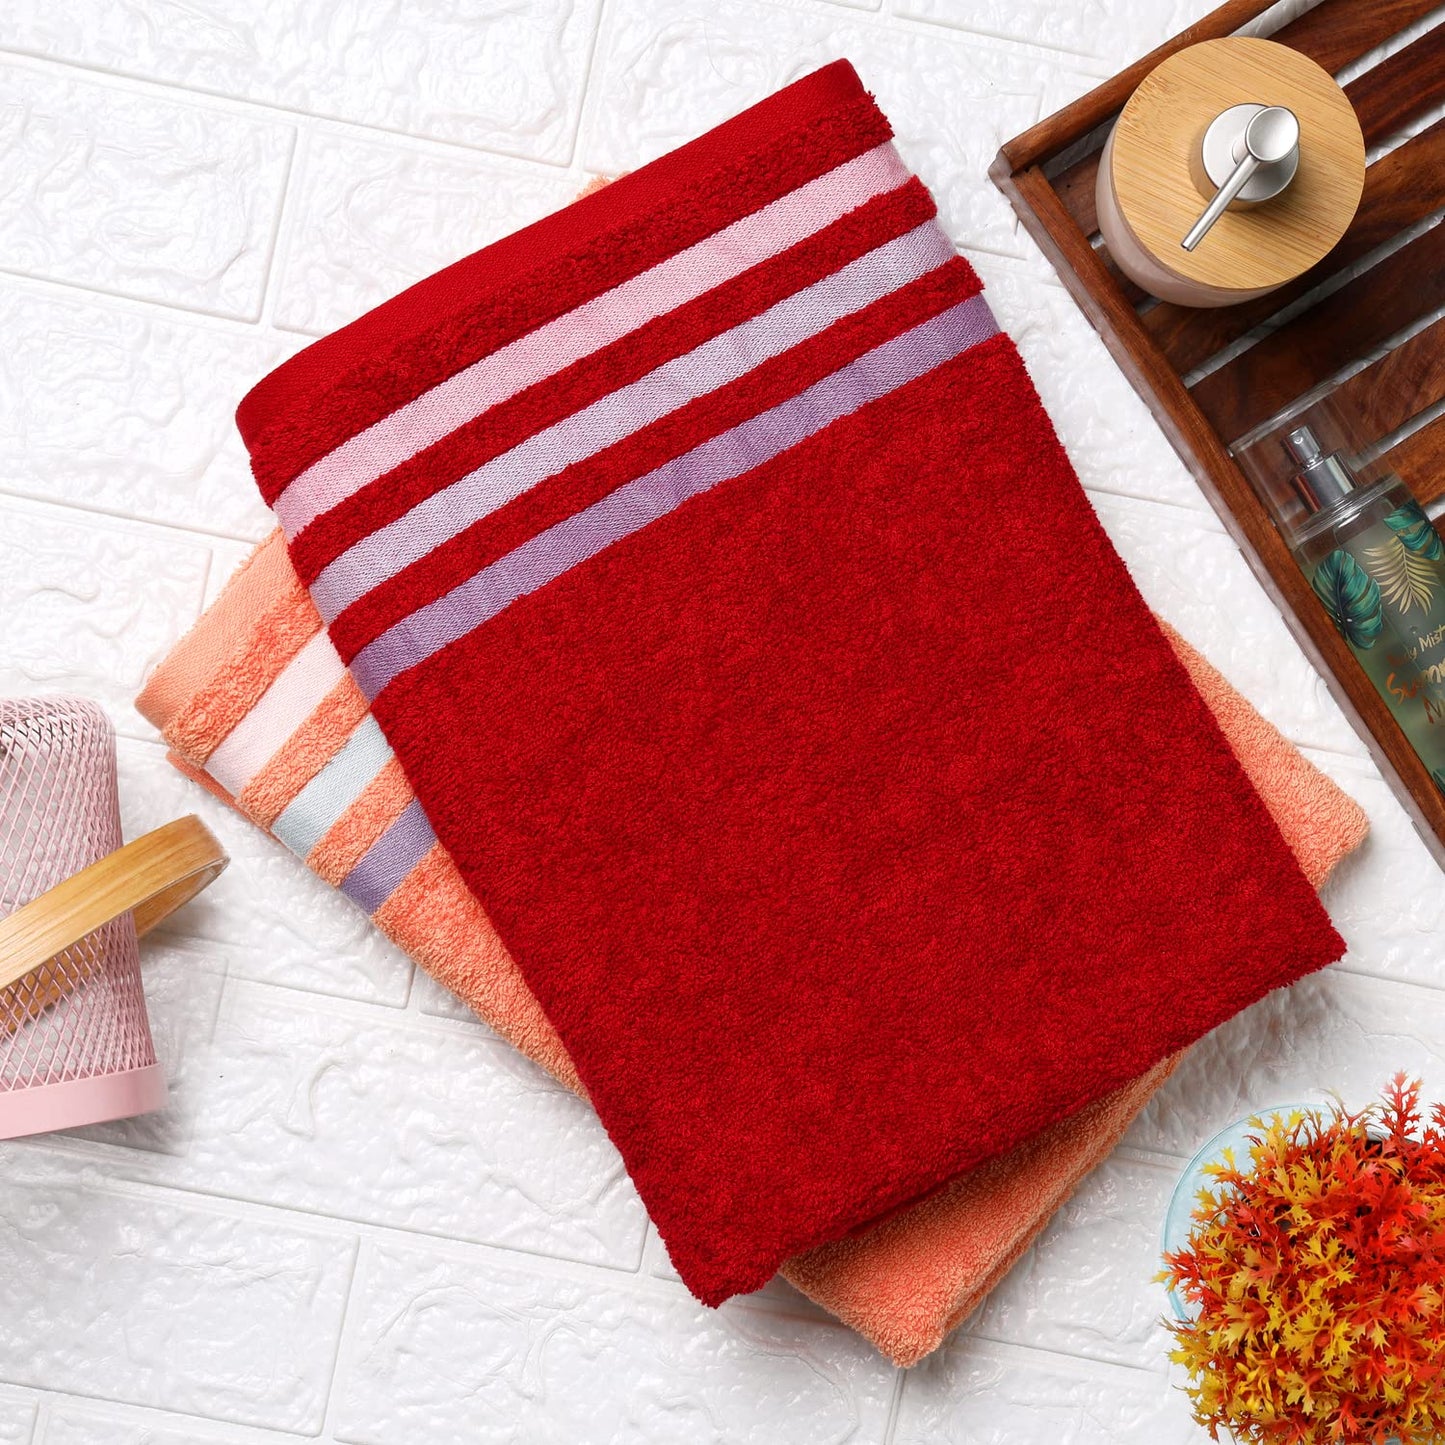 Bath Towel Set of 2, 100% Cotton Red Peach - Cherryland